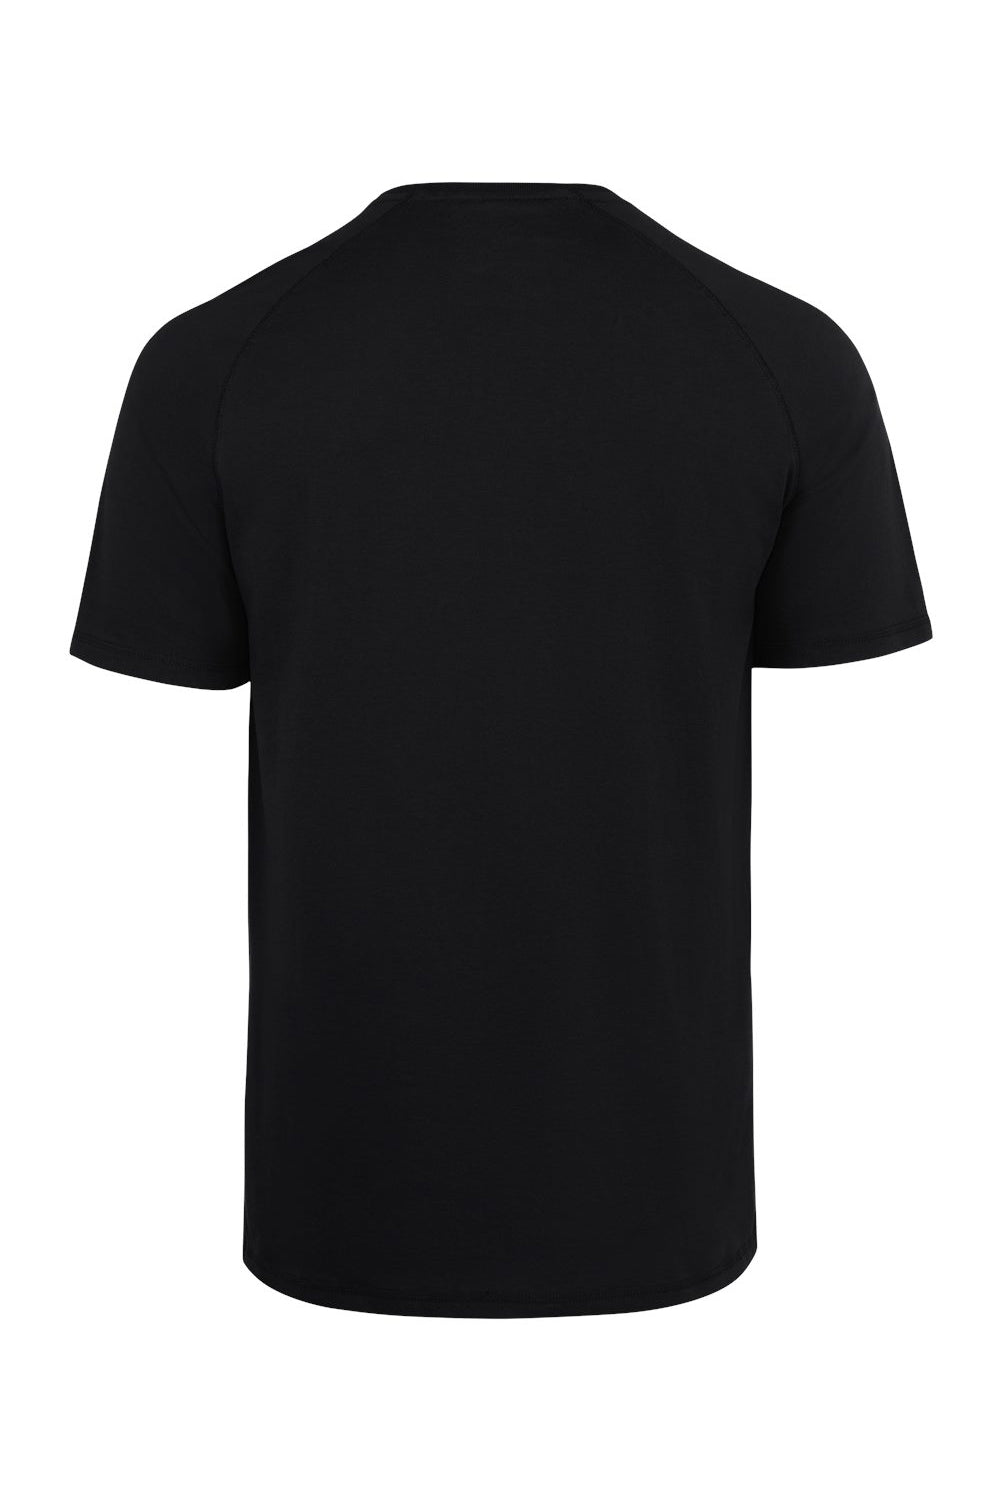 Dickies S600 Mens Performance Moisture Wicking Short Sleeve Crewneck T-Shirt w/ Pocket Black Flat Back